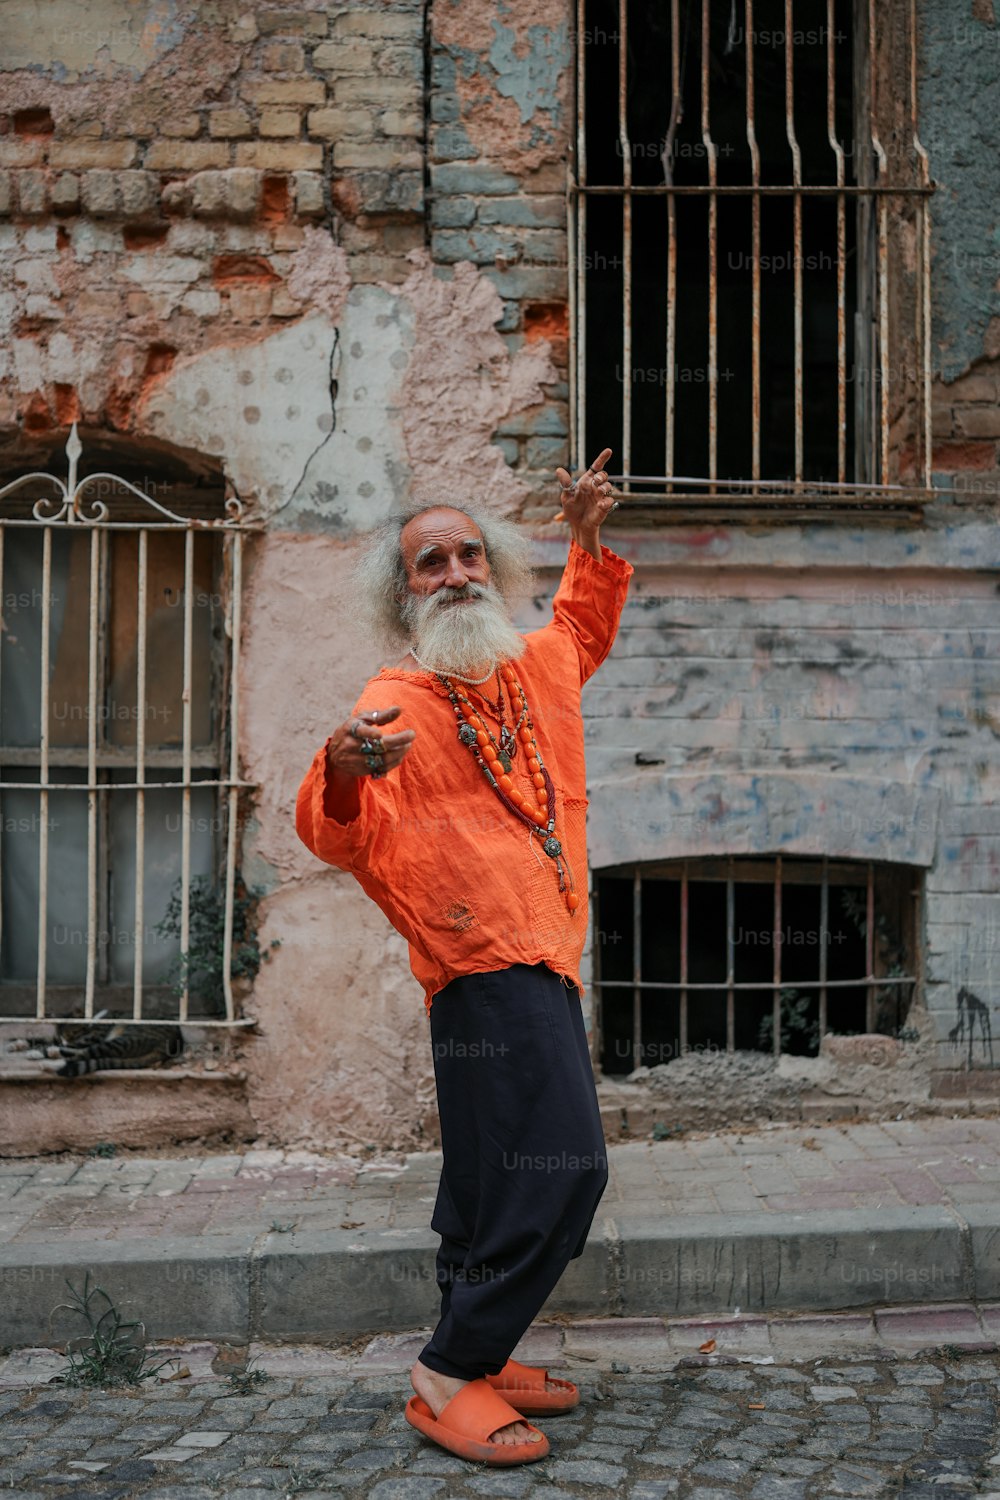 a man with a long white beard and orange shirt